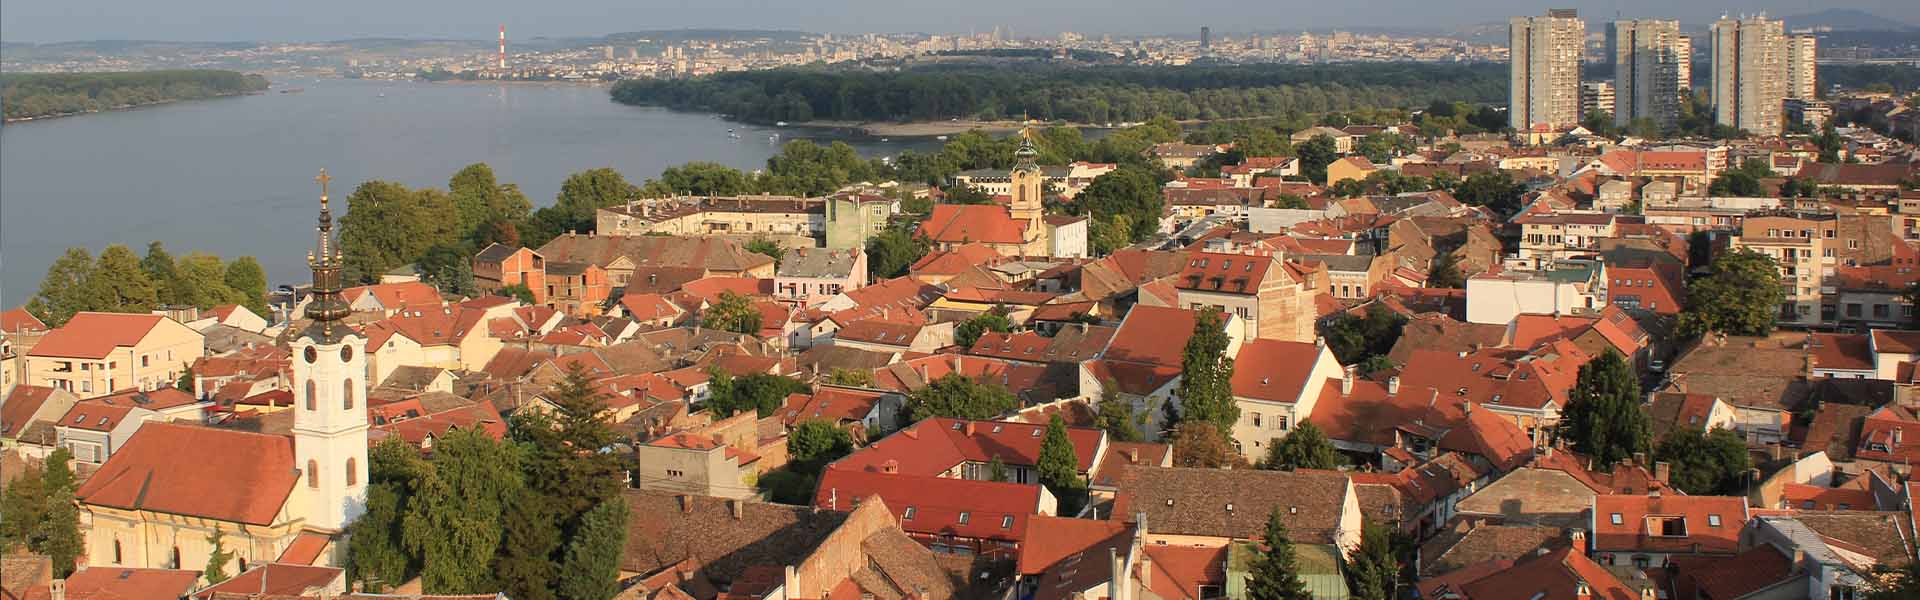 Rent a car Zemun | Belgrade, Serbia